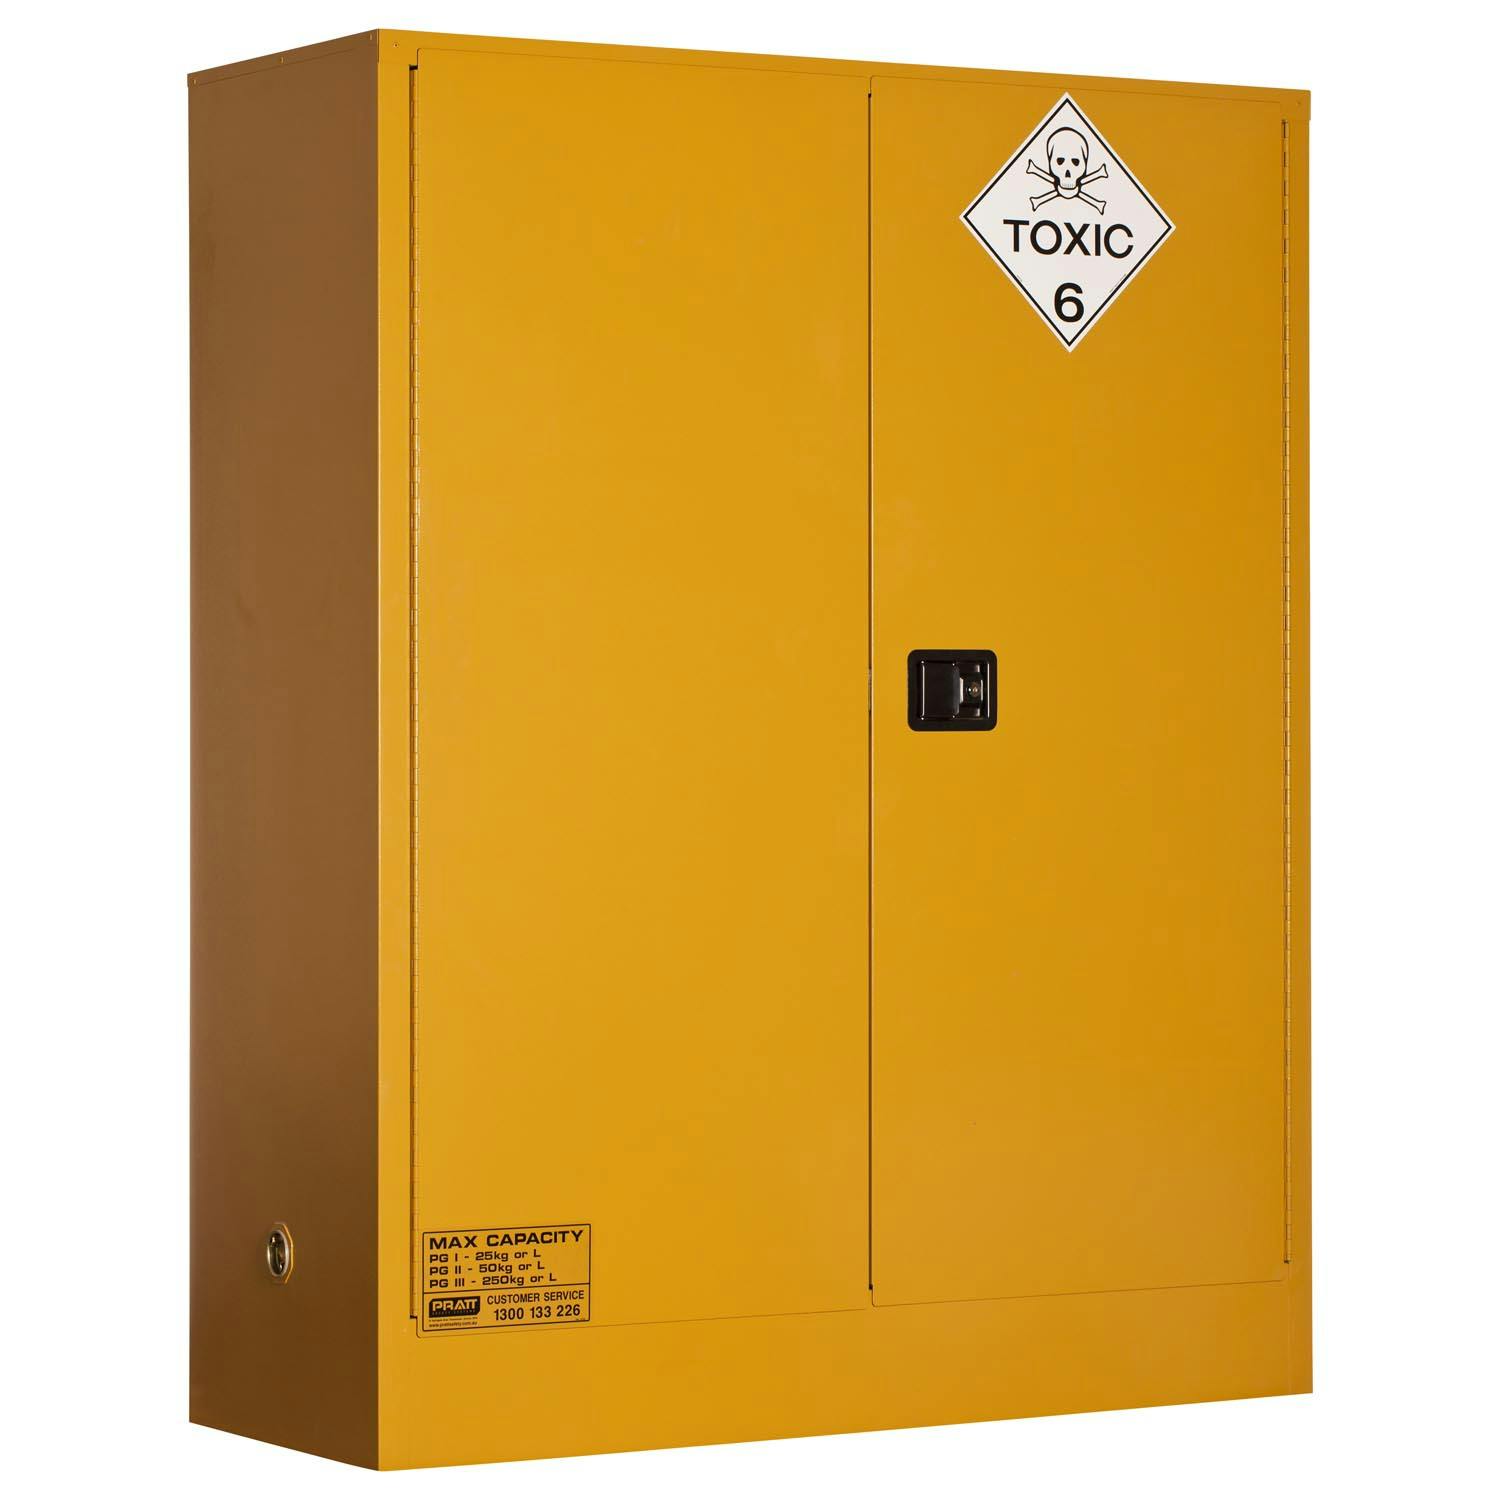 Pratt Toxic Substance Storage Cabinet: 250L Xl - 2 Doors - 3 Shelves